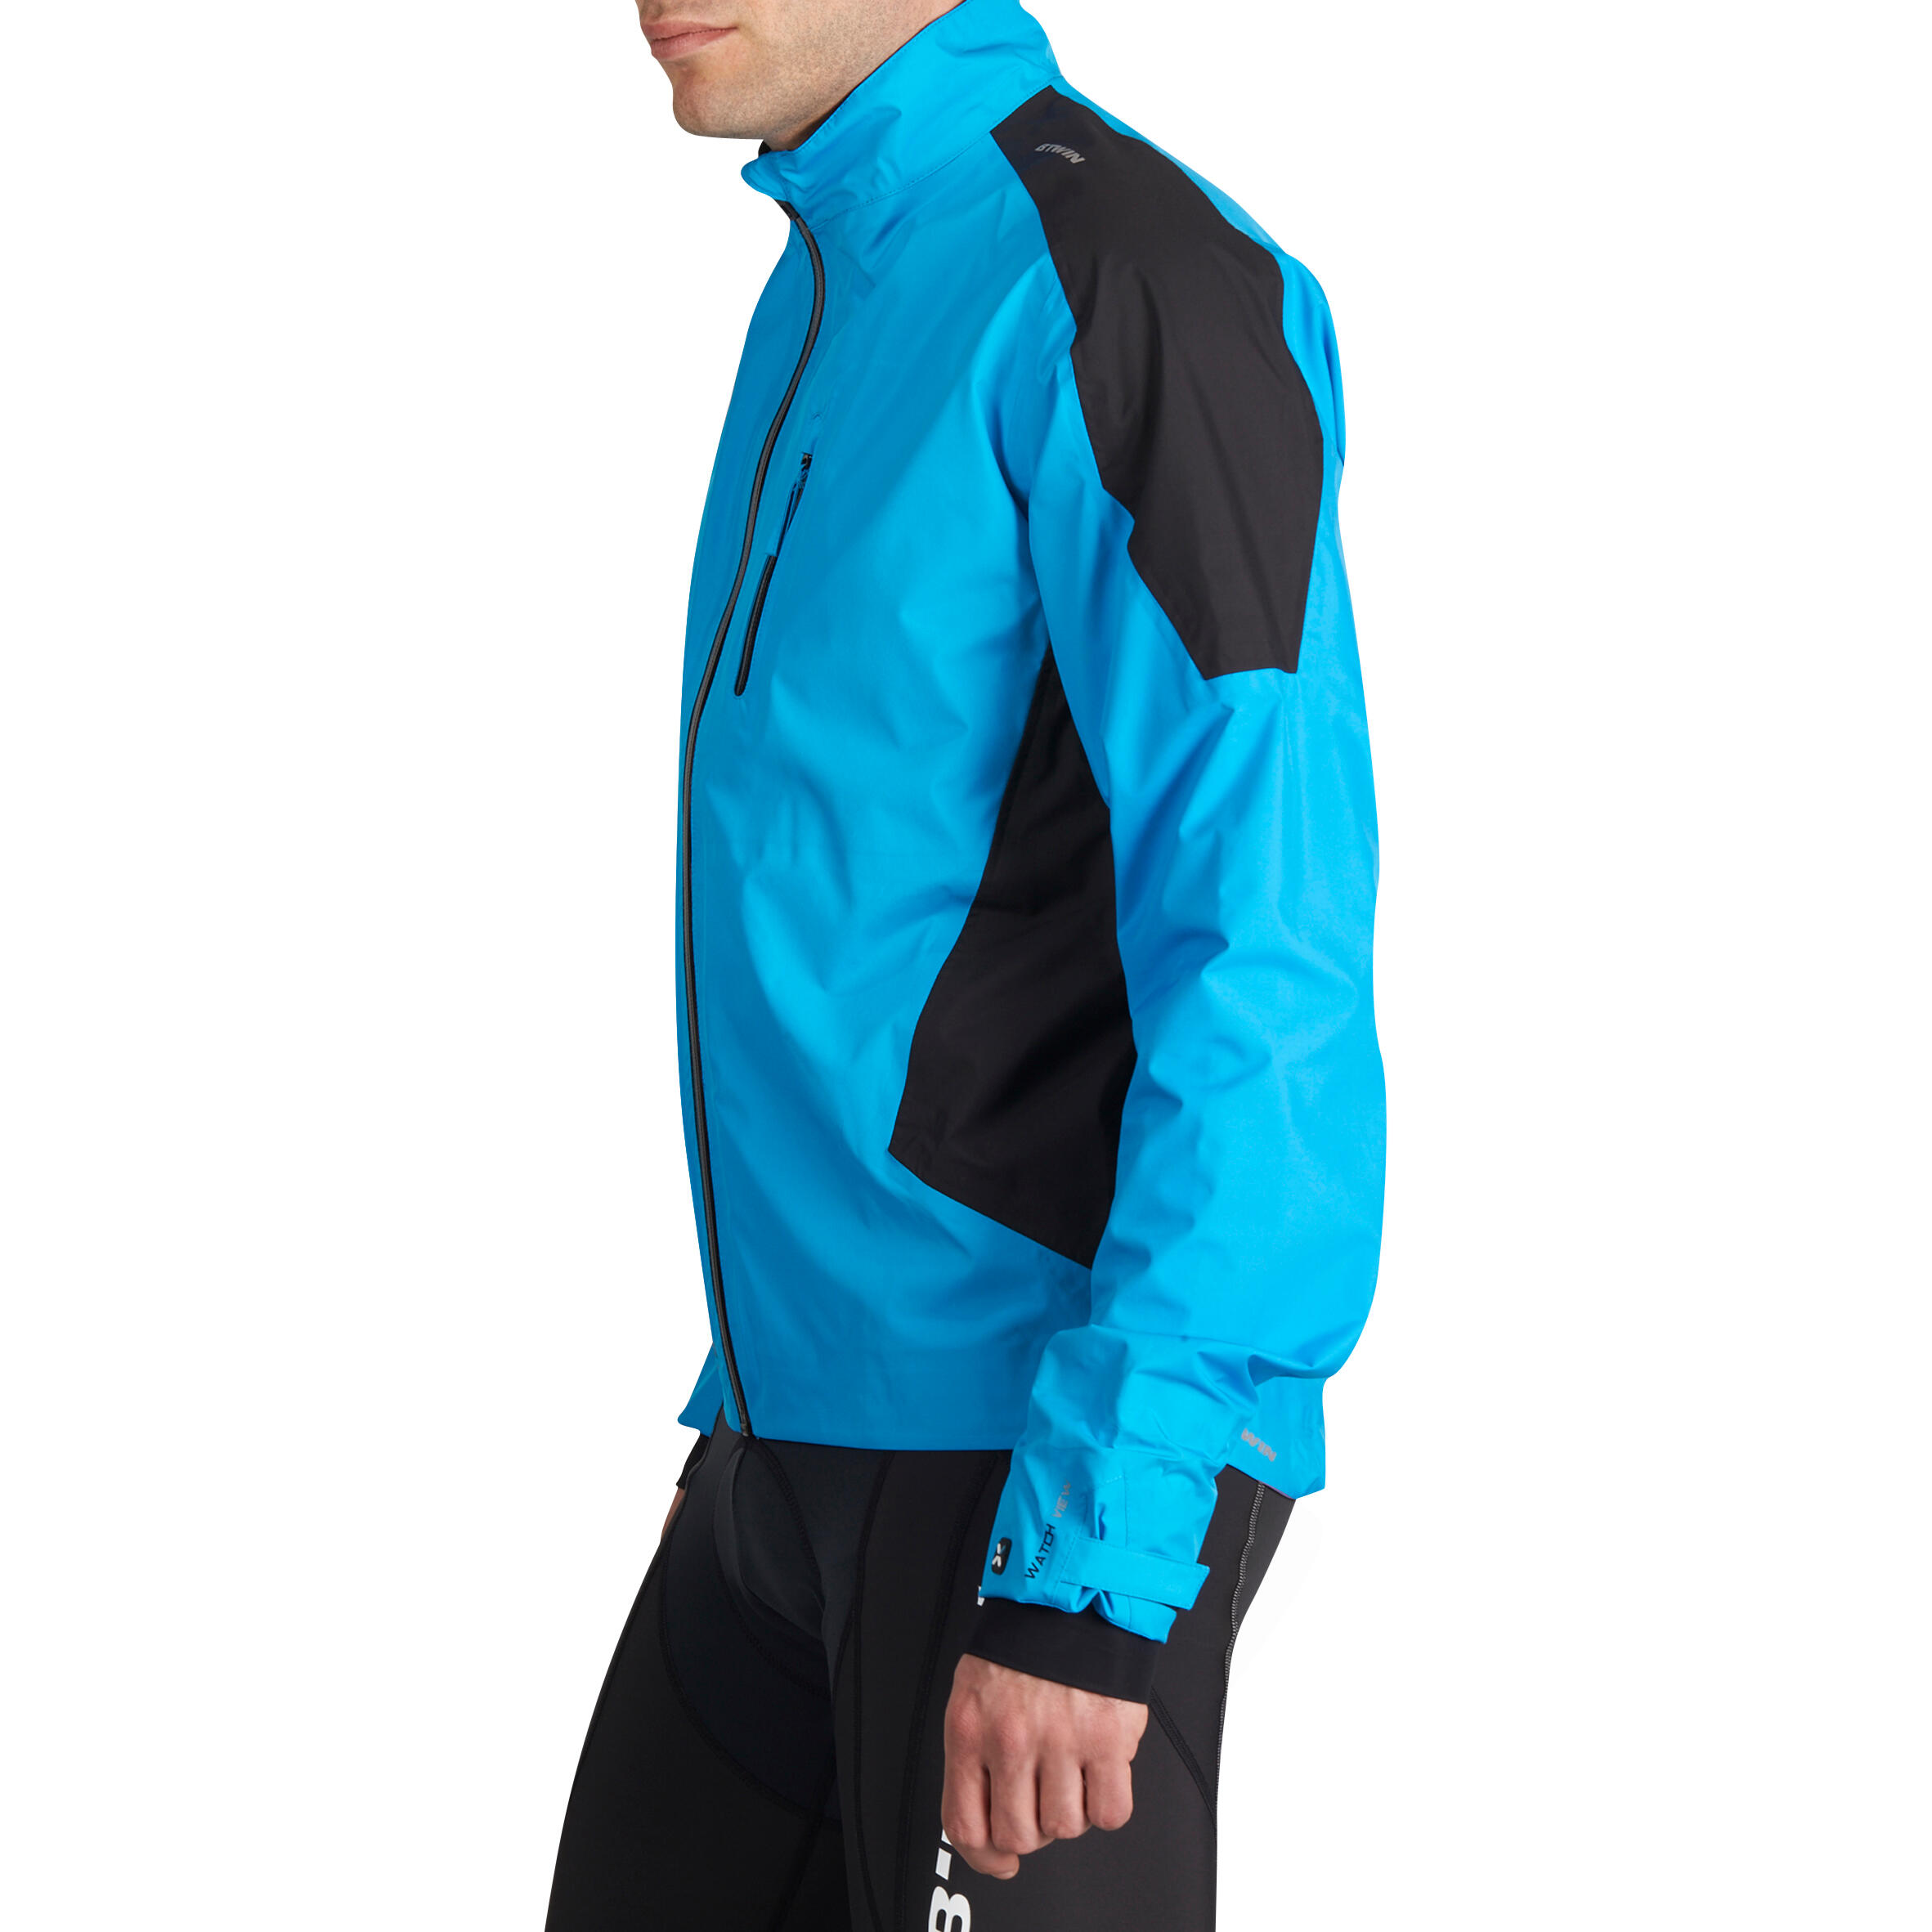 900 Mountain Biking Rainproof Jacket - Blue/Black 5/20